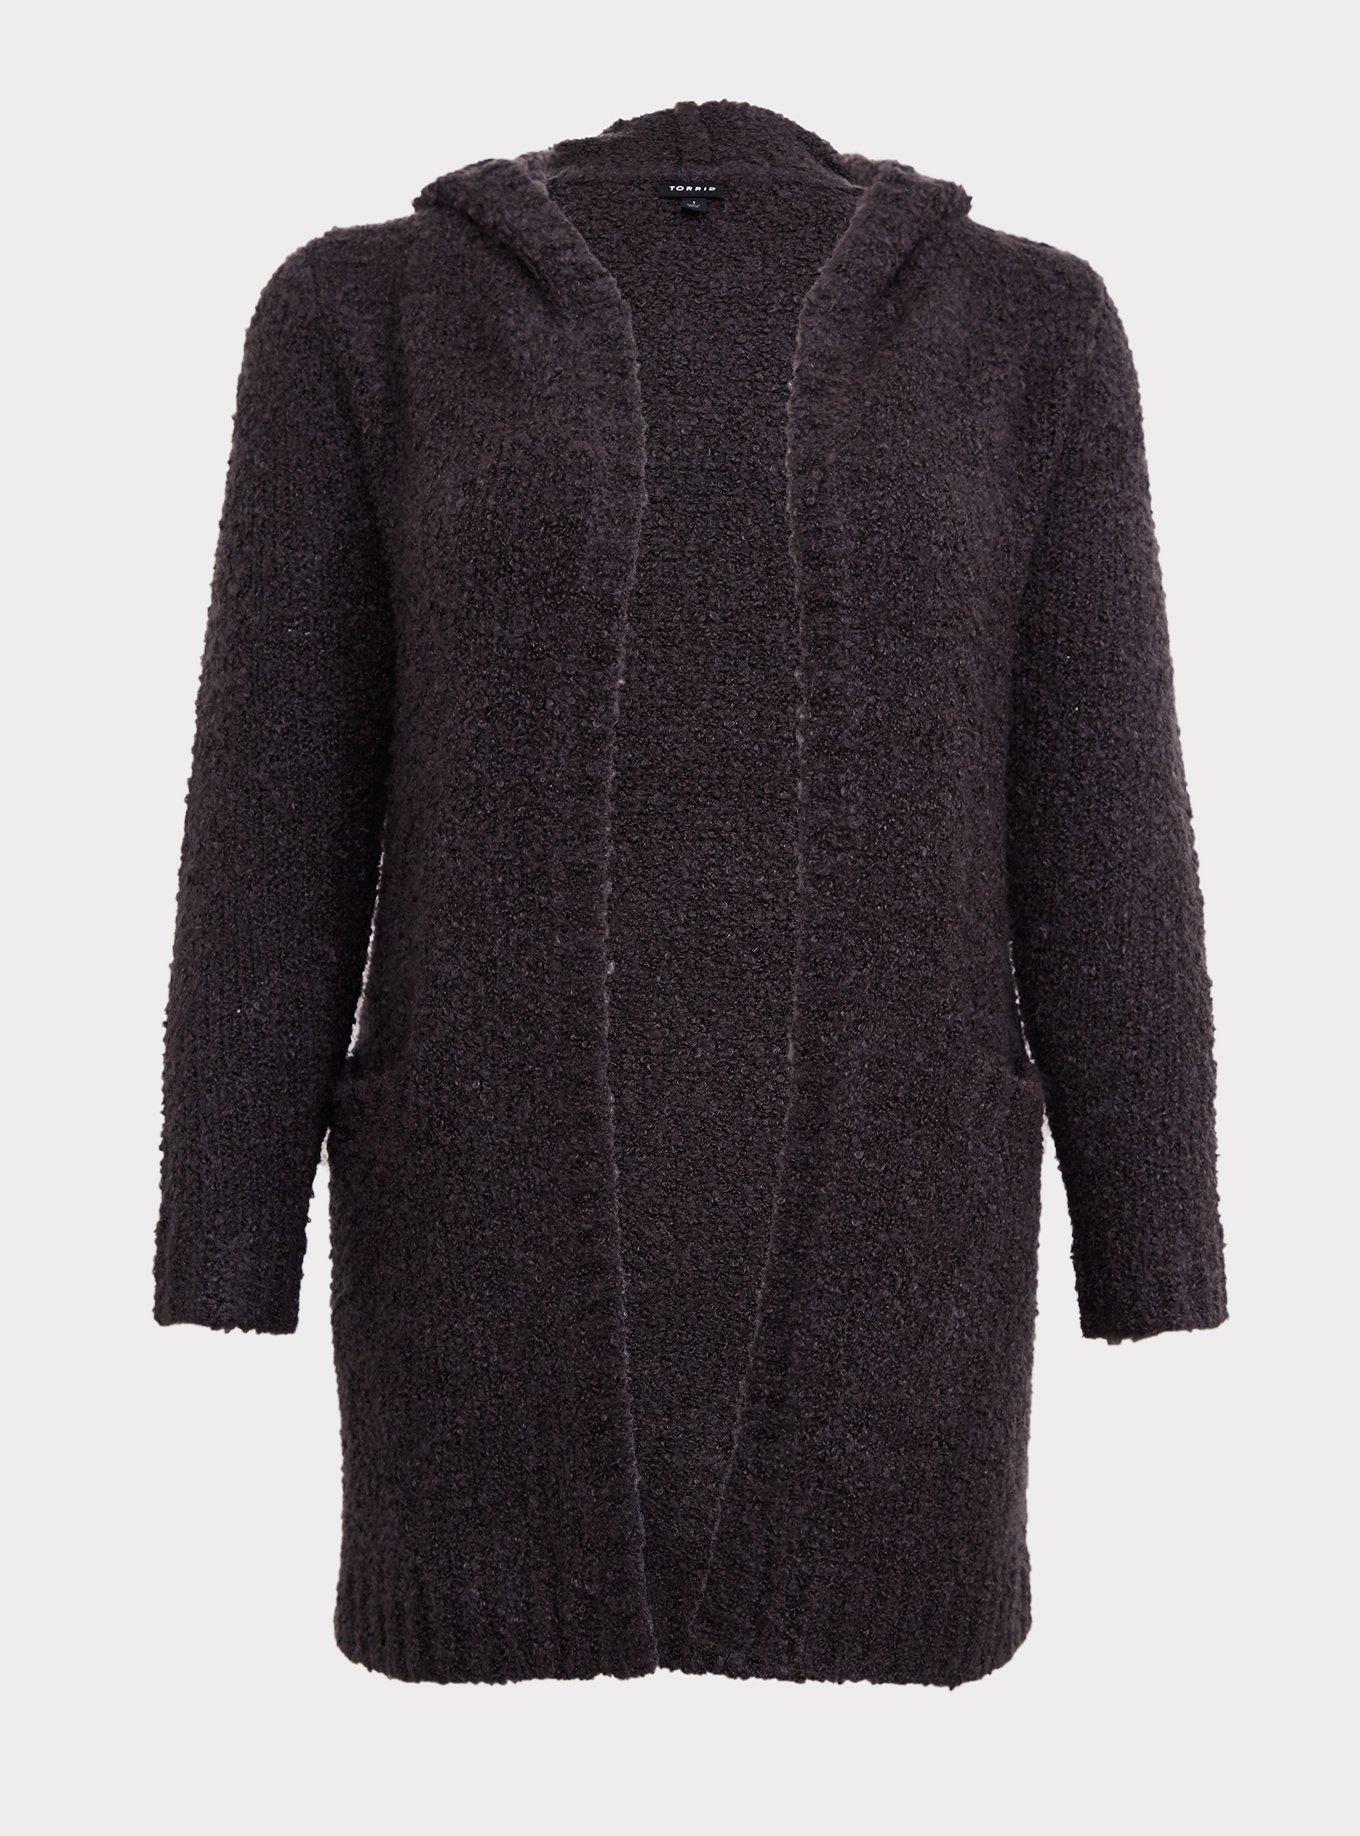 Plus Size - Charcoal Grey Boucle Hooded Cardigan Coat - Torrid